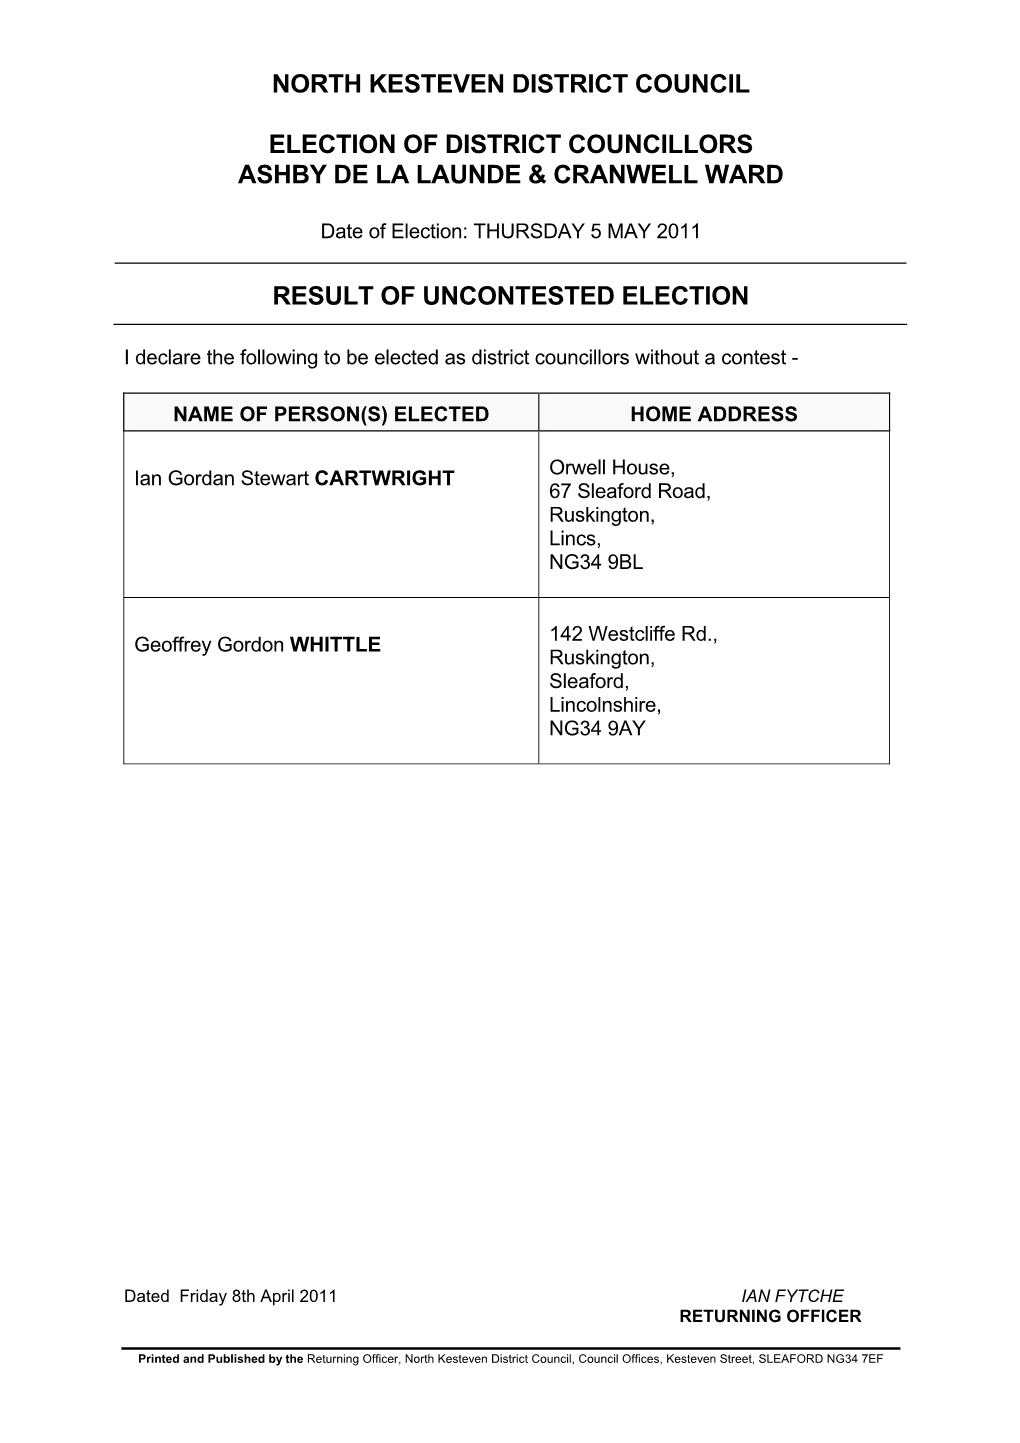 North Kesteven District Council Election of District